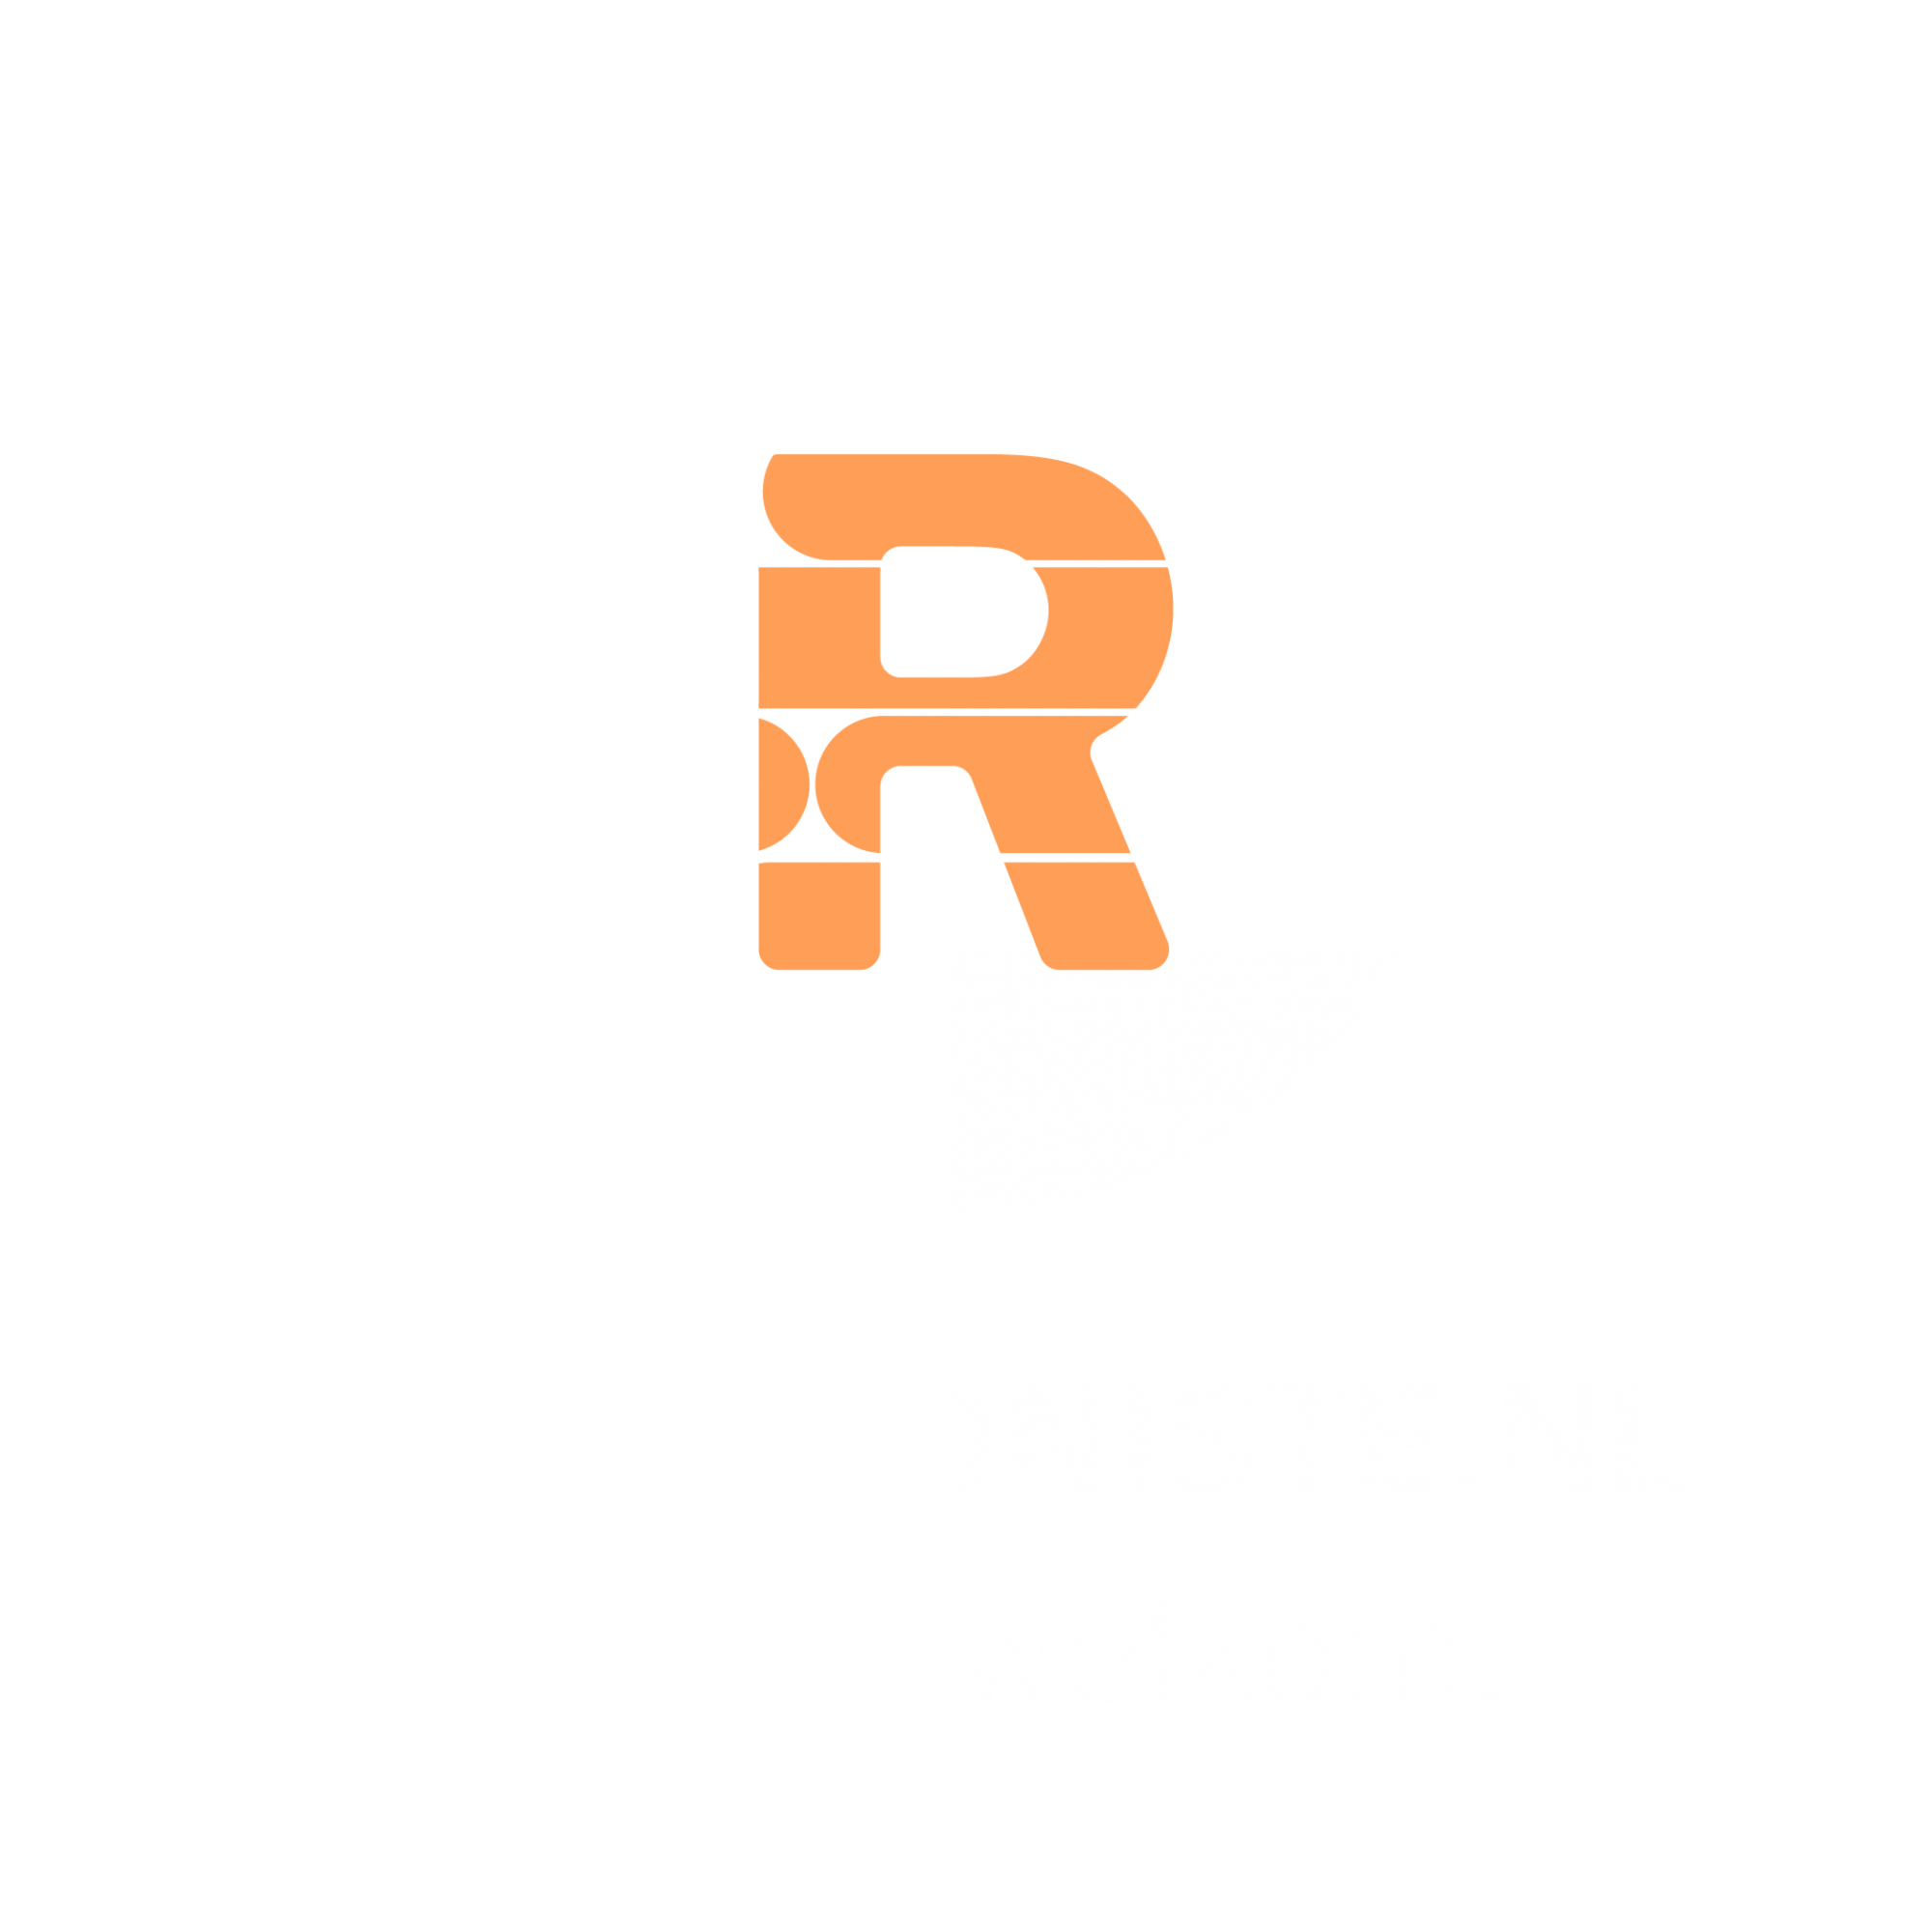 Receptioniste.nl